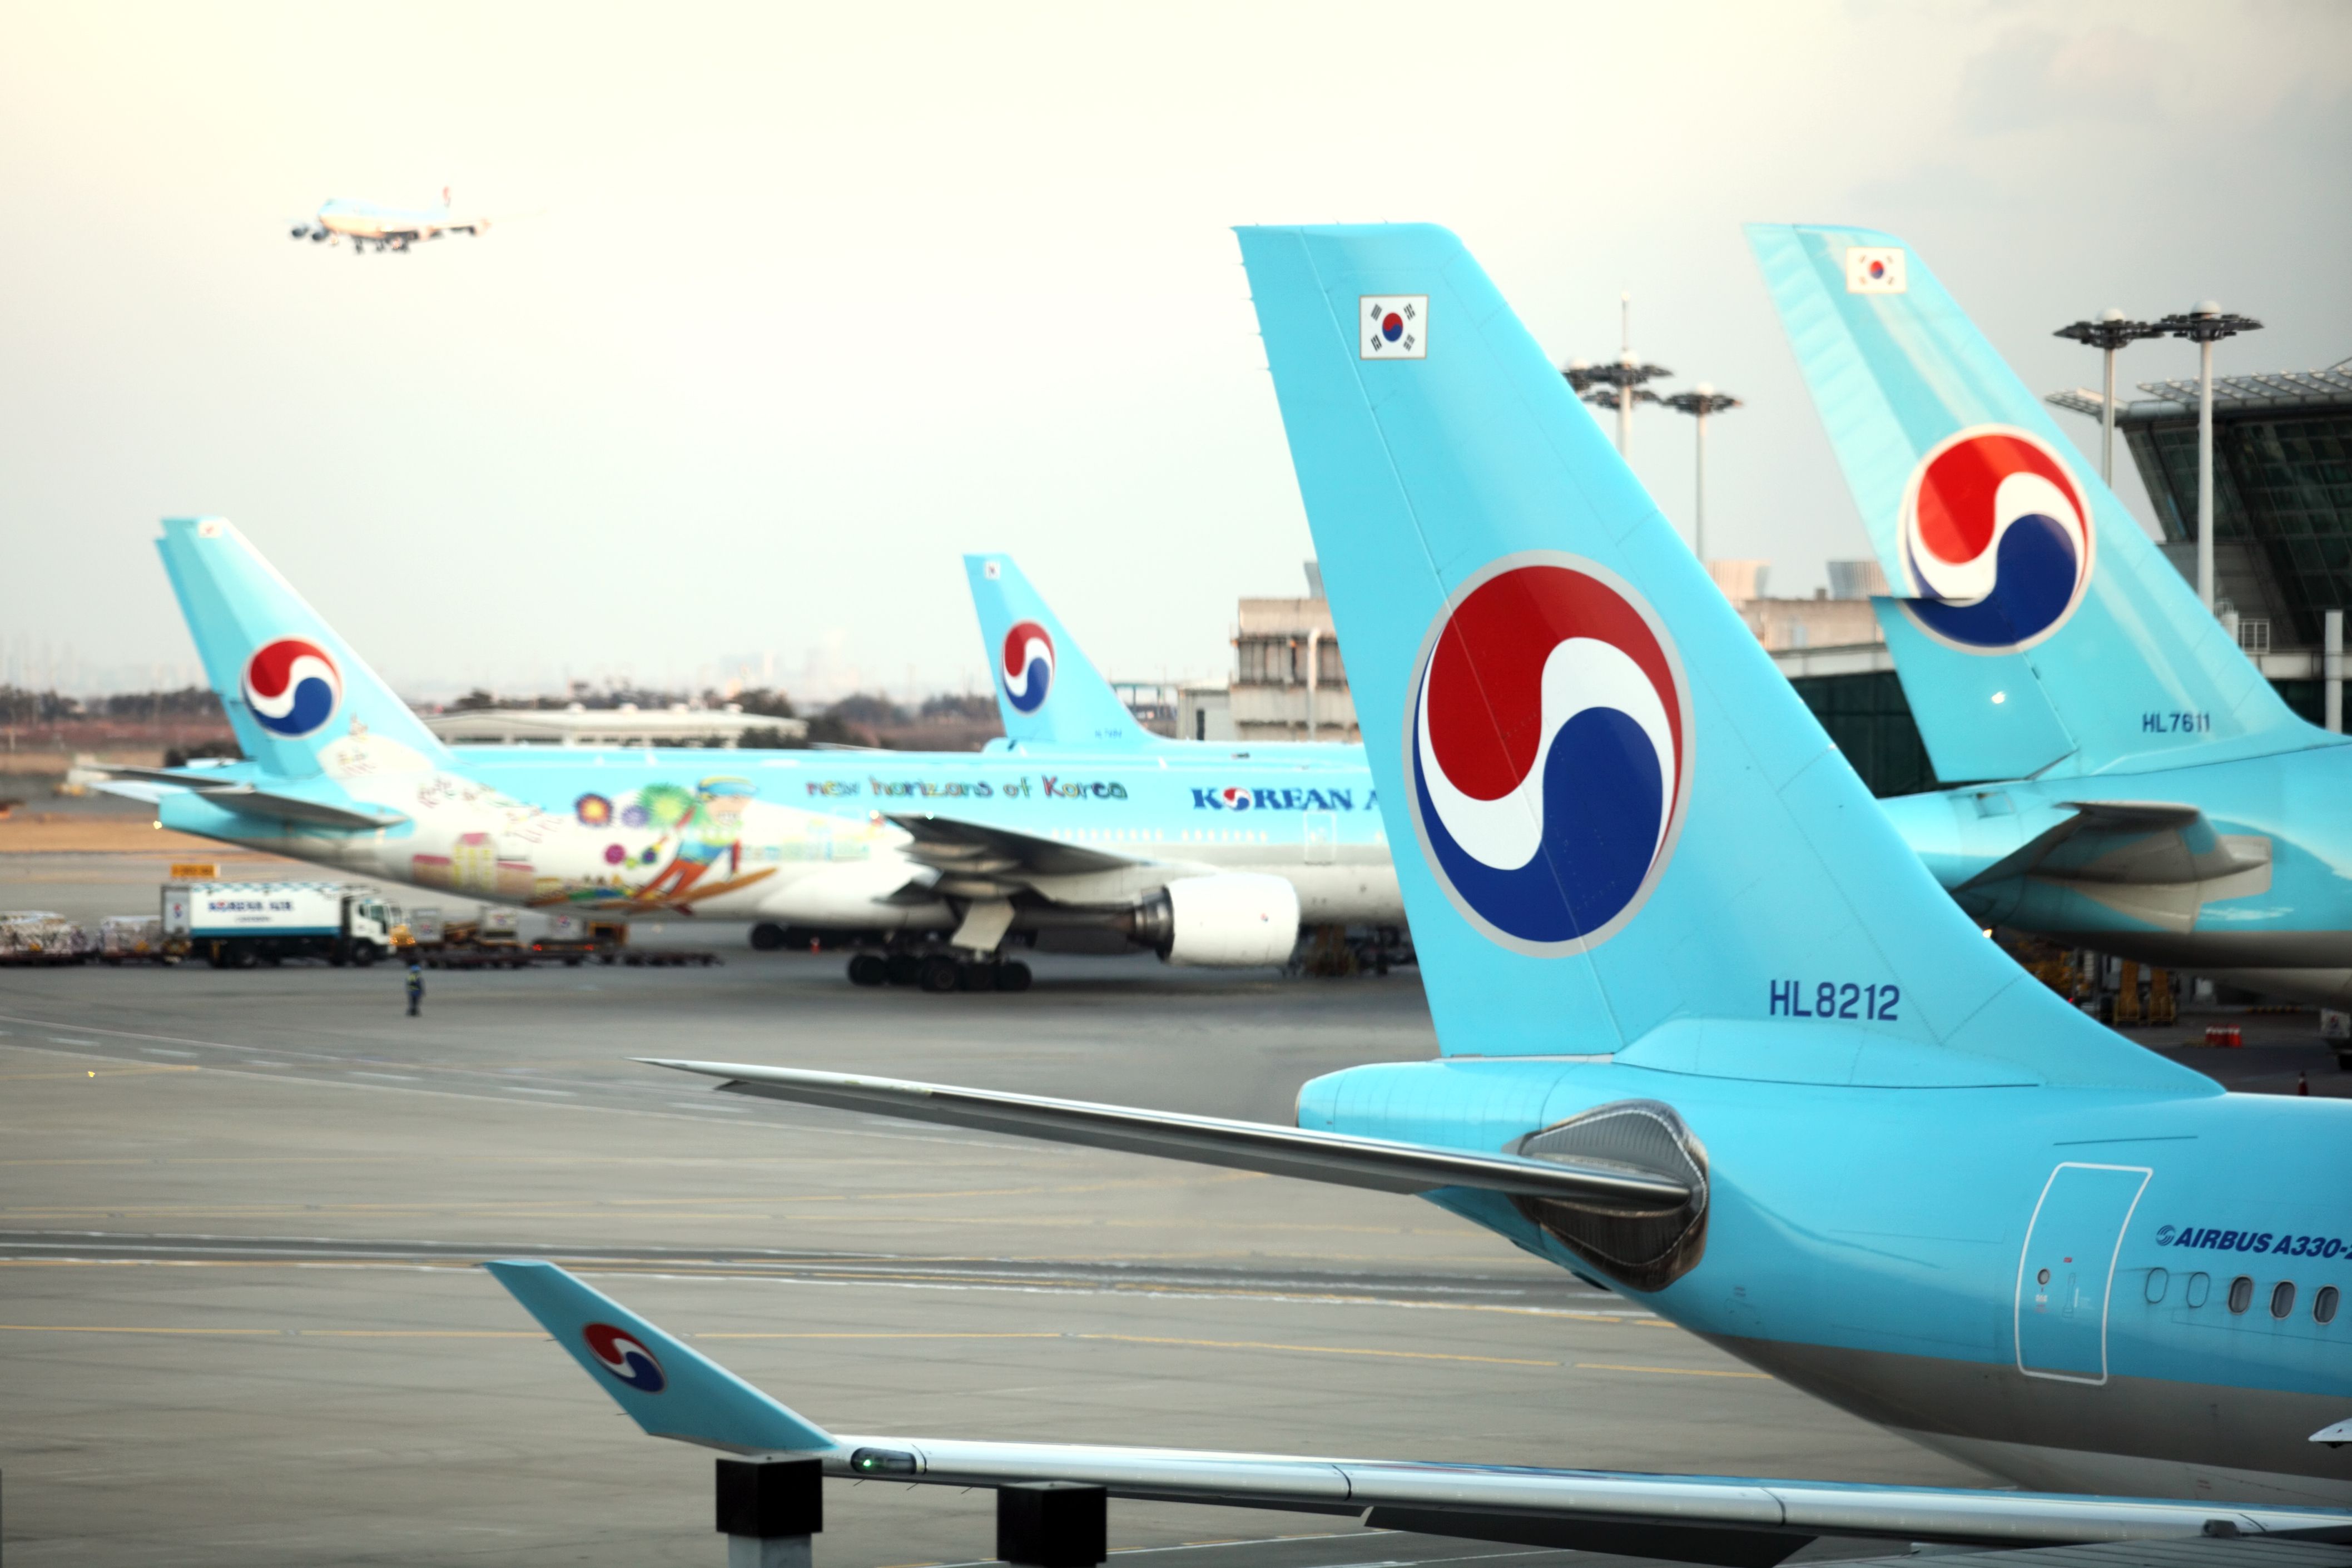 Korean Air aircraft waiting for maintenance, loading and boarding at Seoul Incheon International Airport